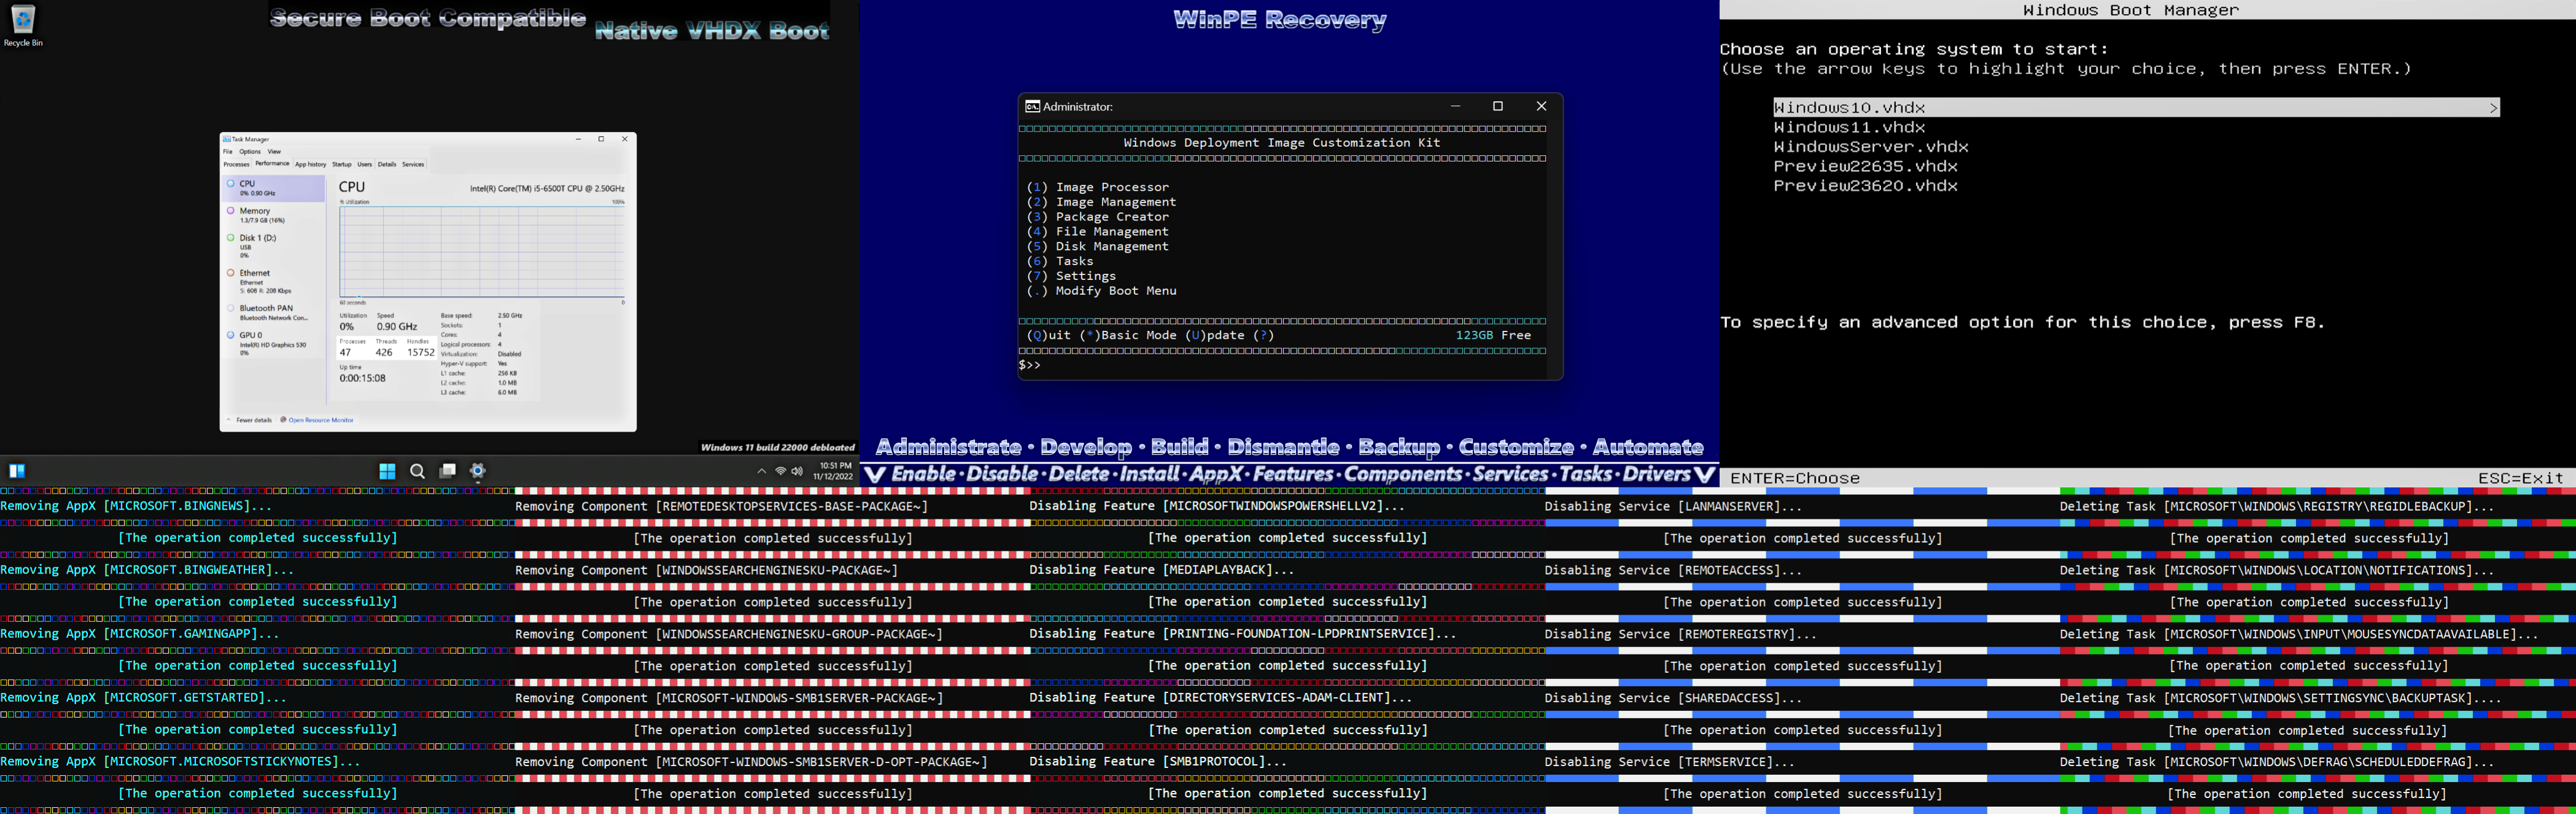 Windows Deployment Image Customization Kit (Windick) v1.1.5.6 00